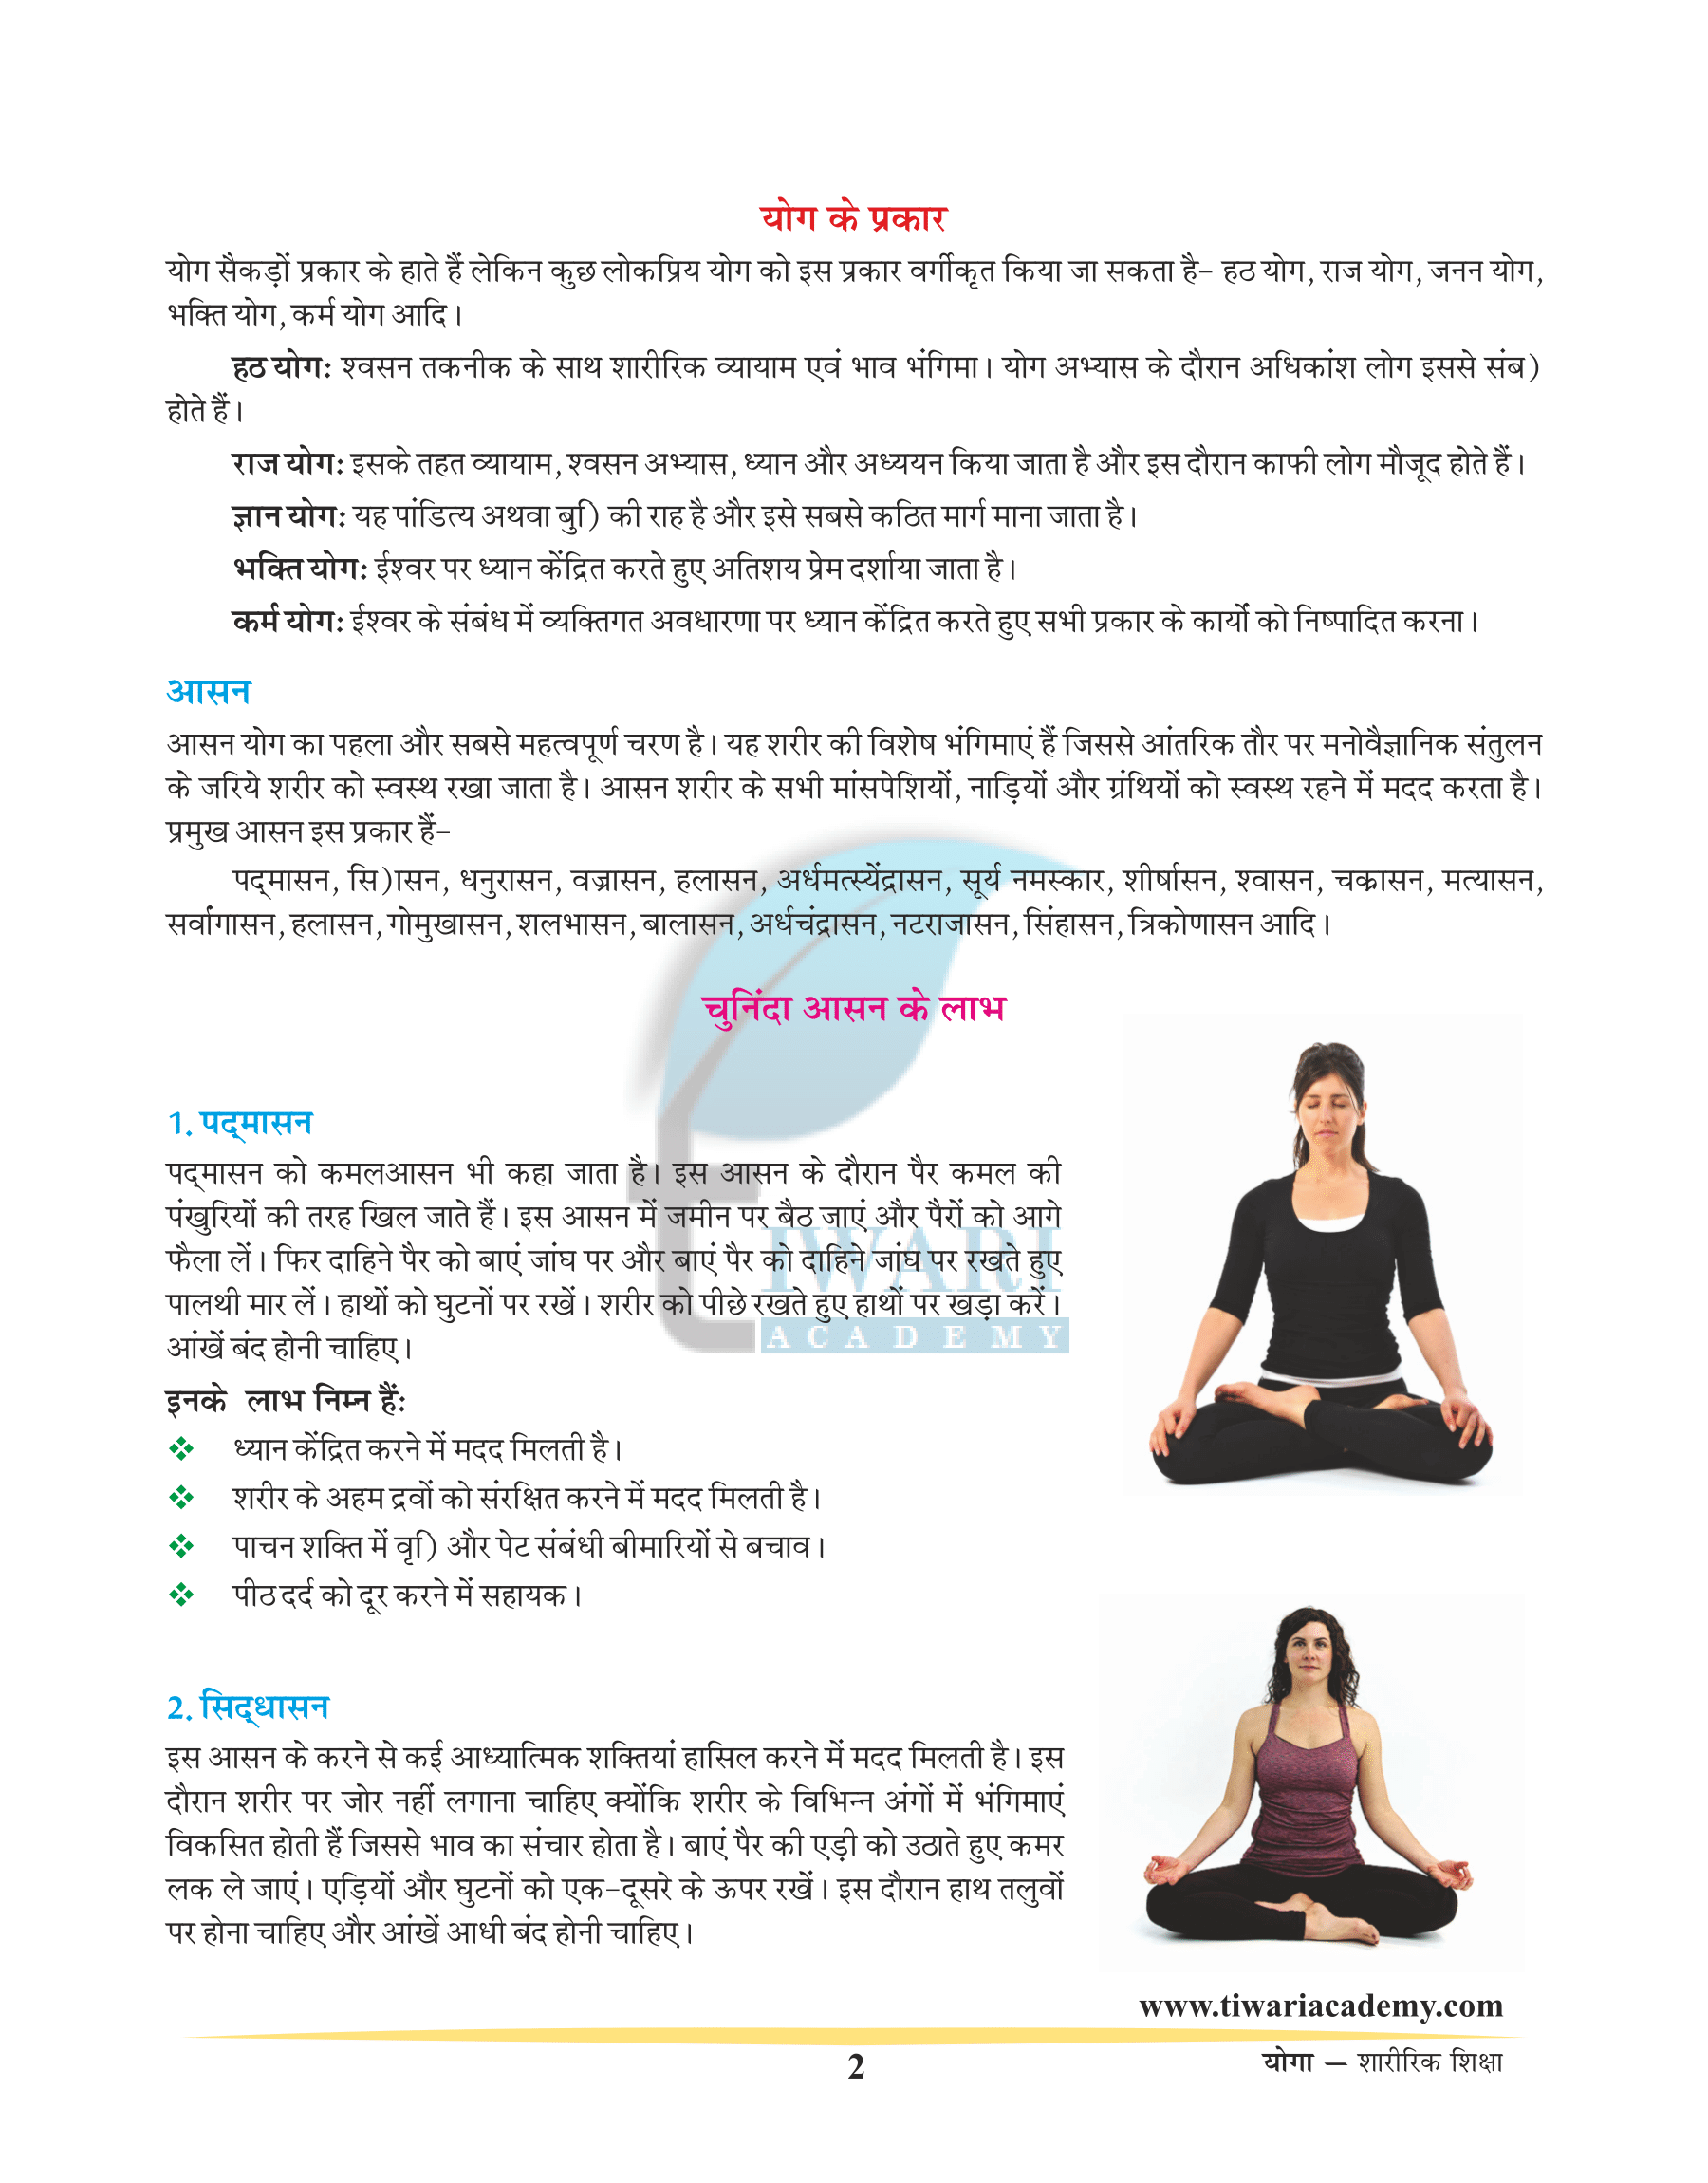 How to practice yoga